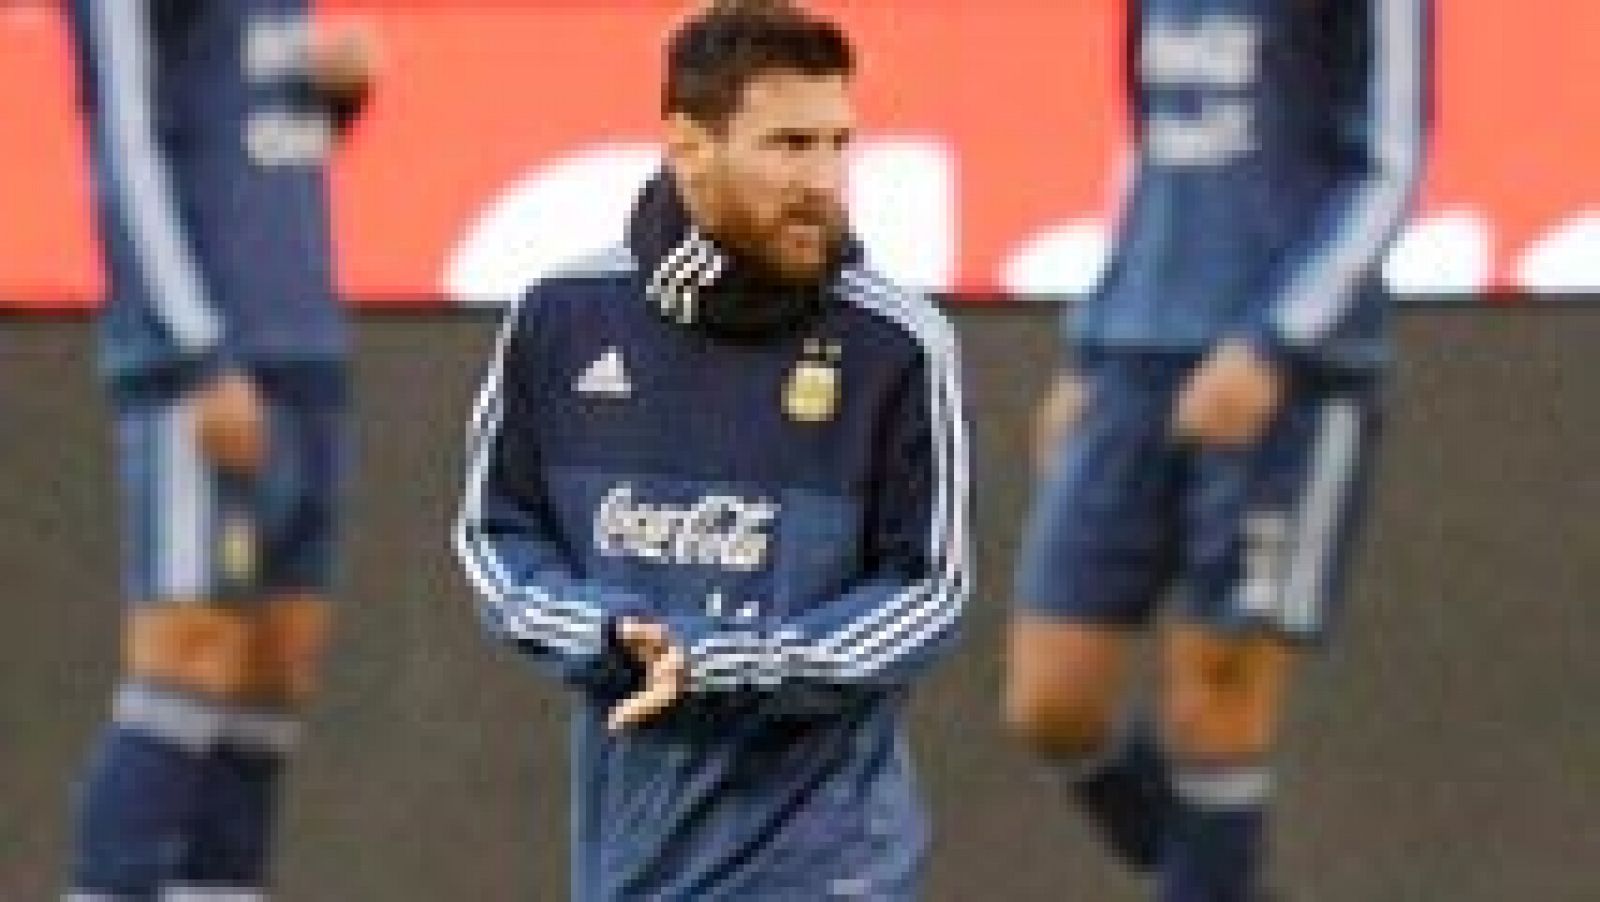 Telediario 1: Messi elogia a Cristiano: "Se supera cada año" | RTVE Play